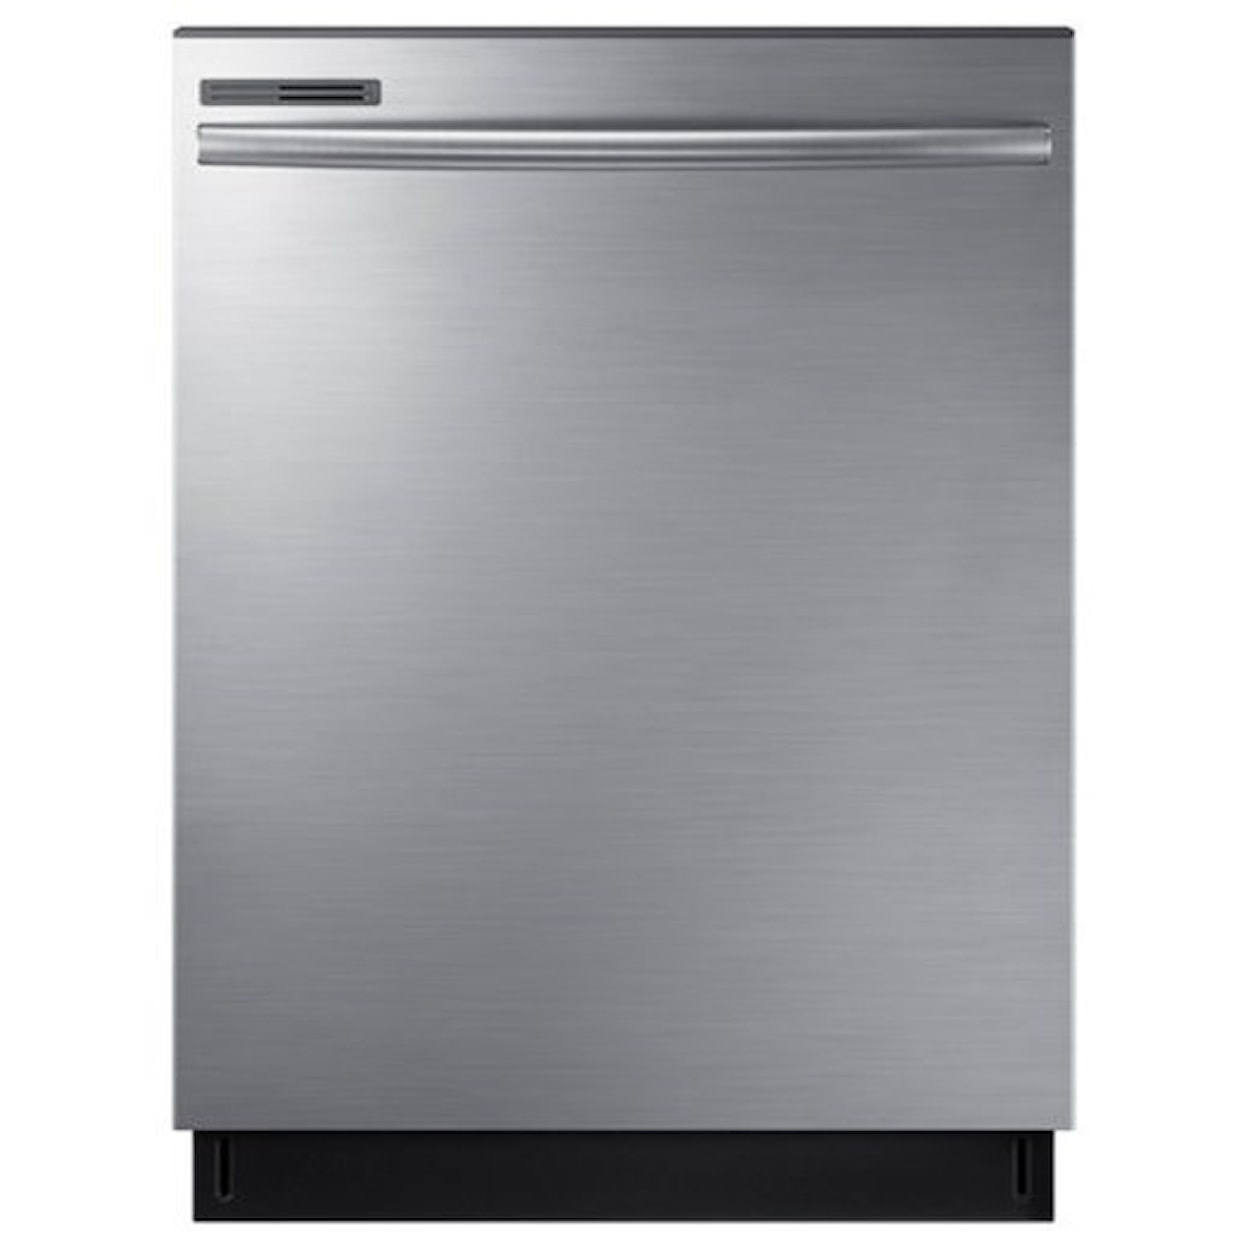 Samsung Appliances Dishwashers Top Control Dishwasher